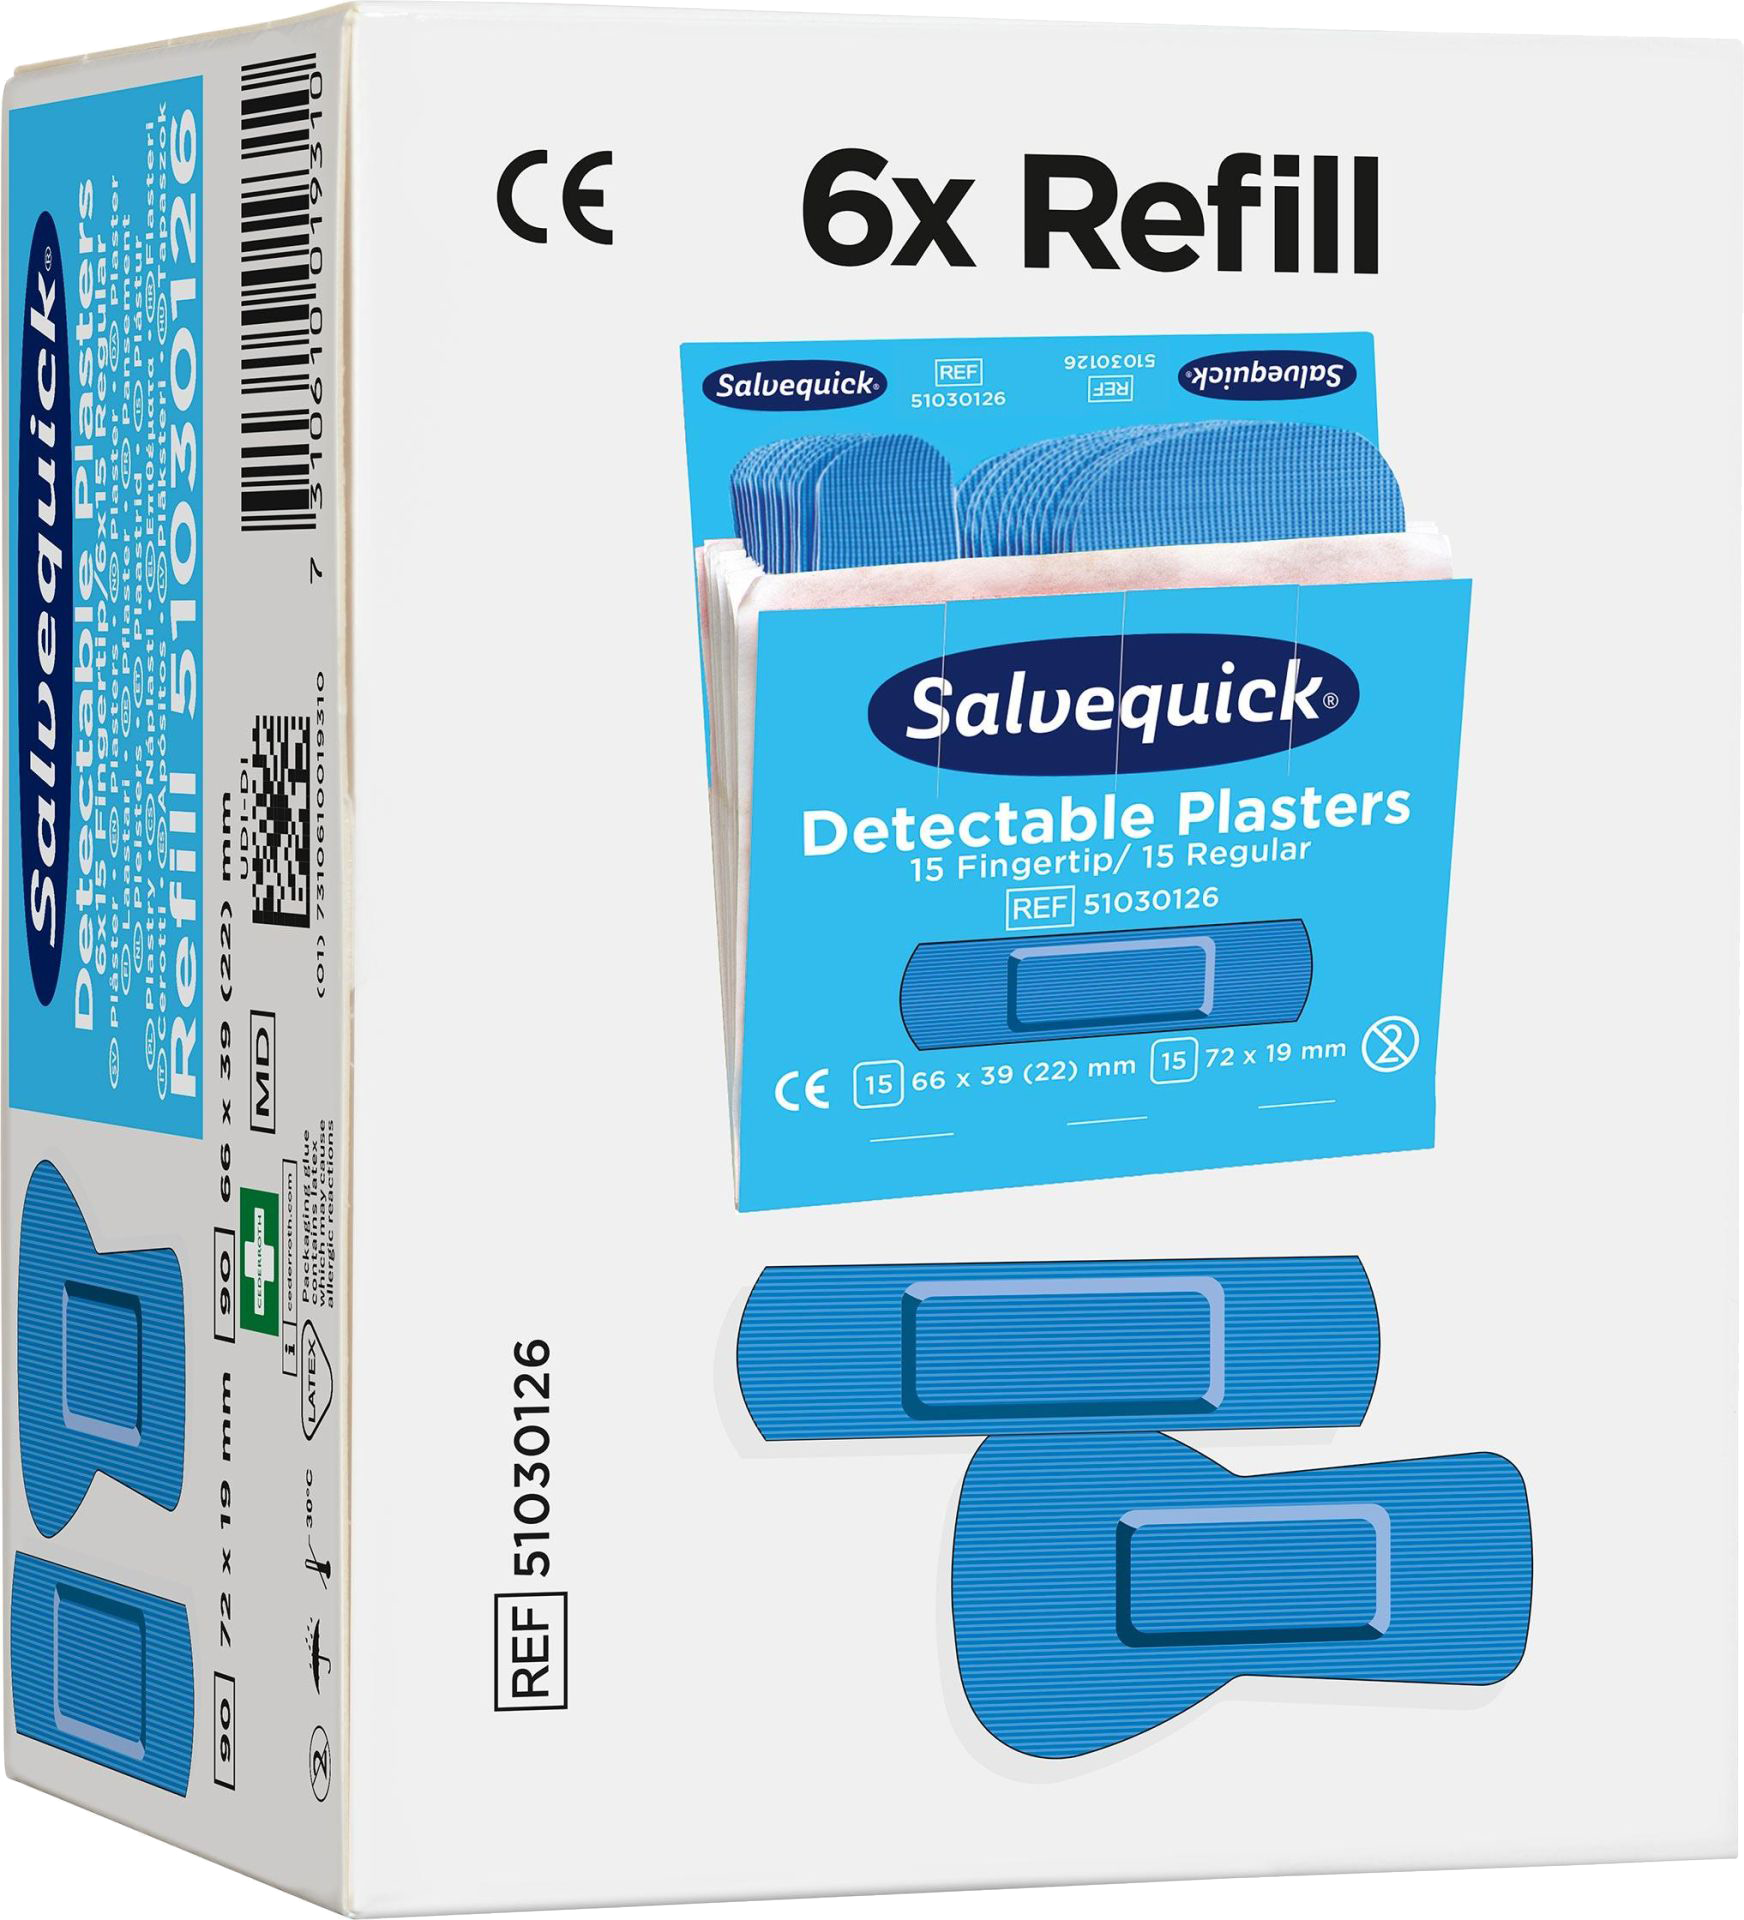 Pflaster-Refill Salvequick® 6754CAP/51030126 Fingerkuppe/normal, blue detectable, 6x 30 Pflaster